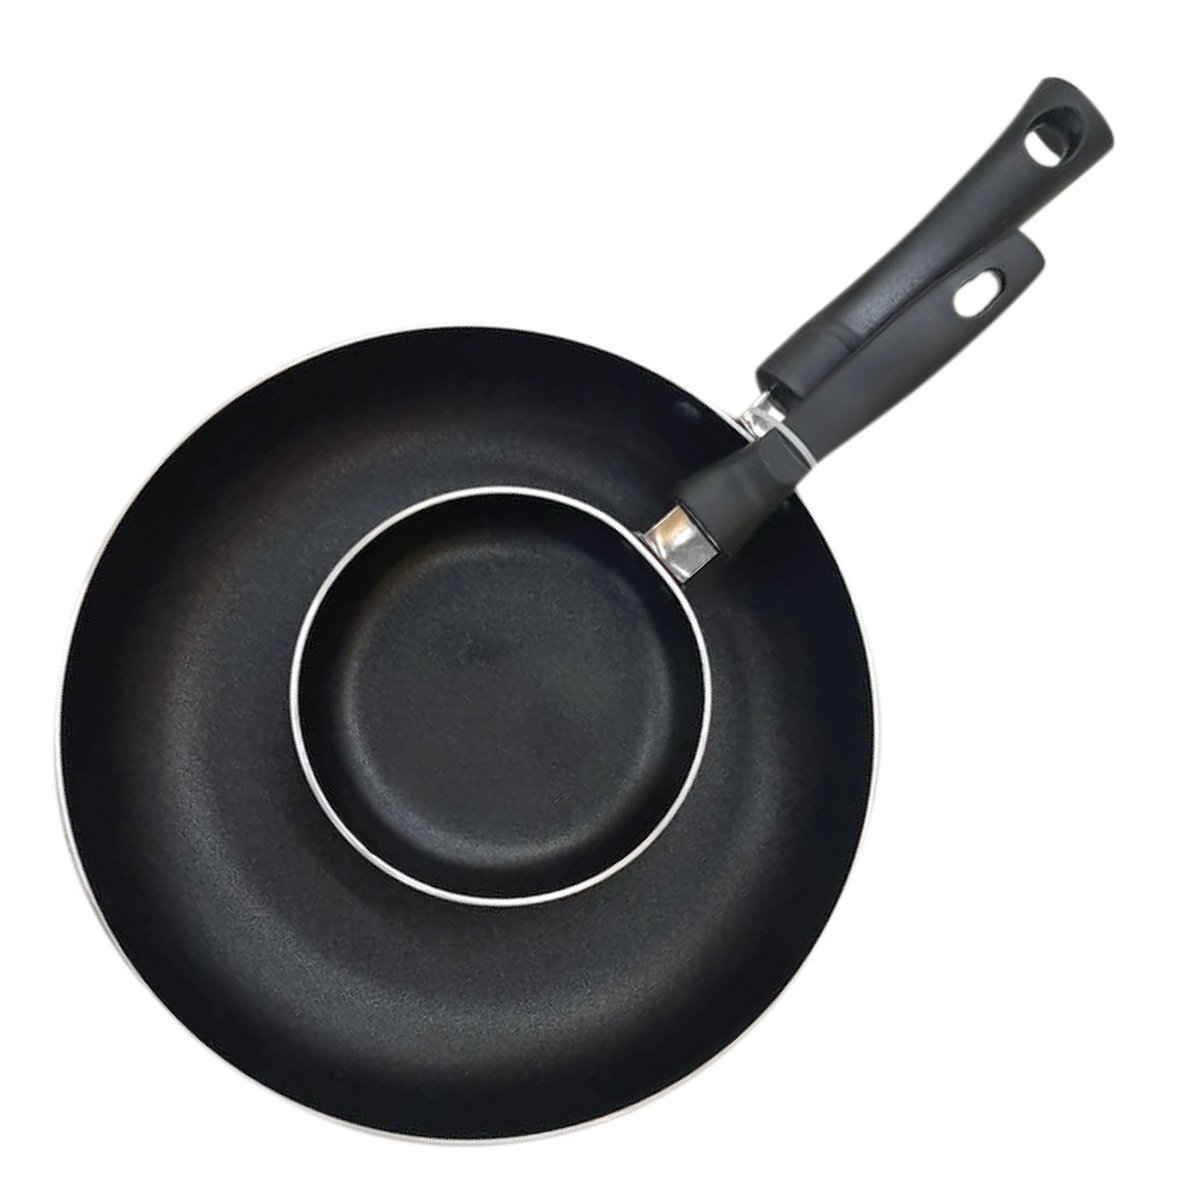 Chefline Aluminium Non Stick Fry Pan Set, 2 pcs, 12 cm + 24 cm